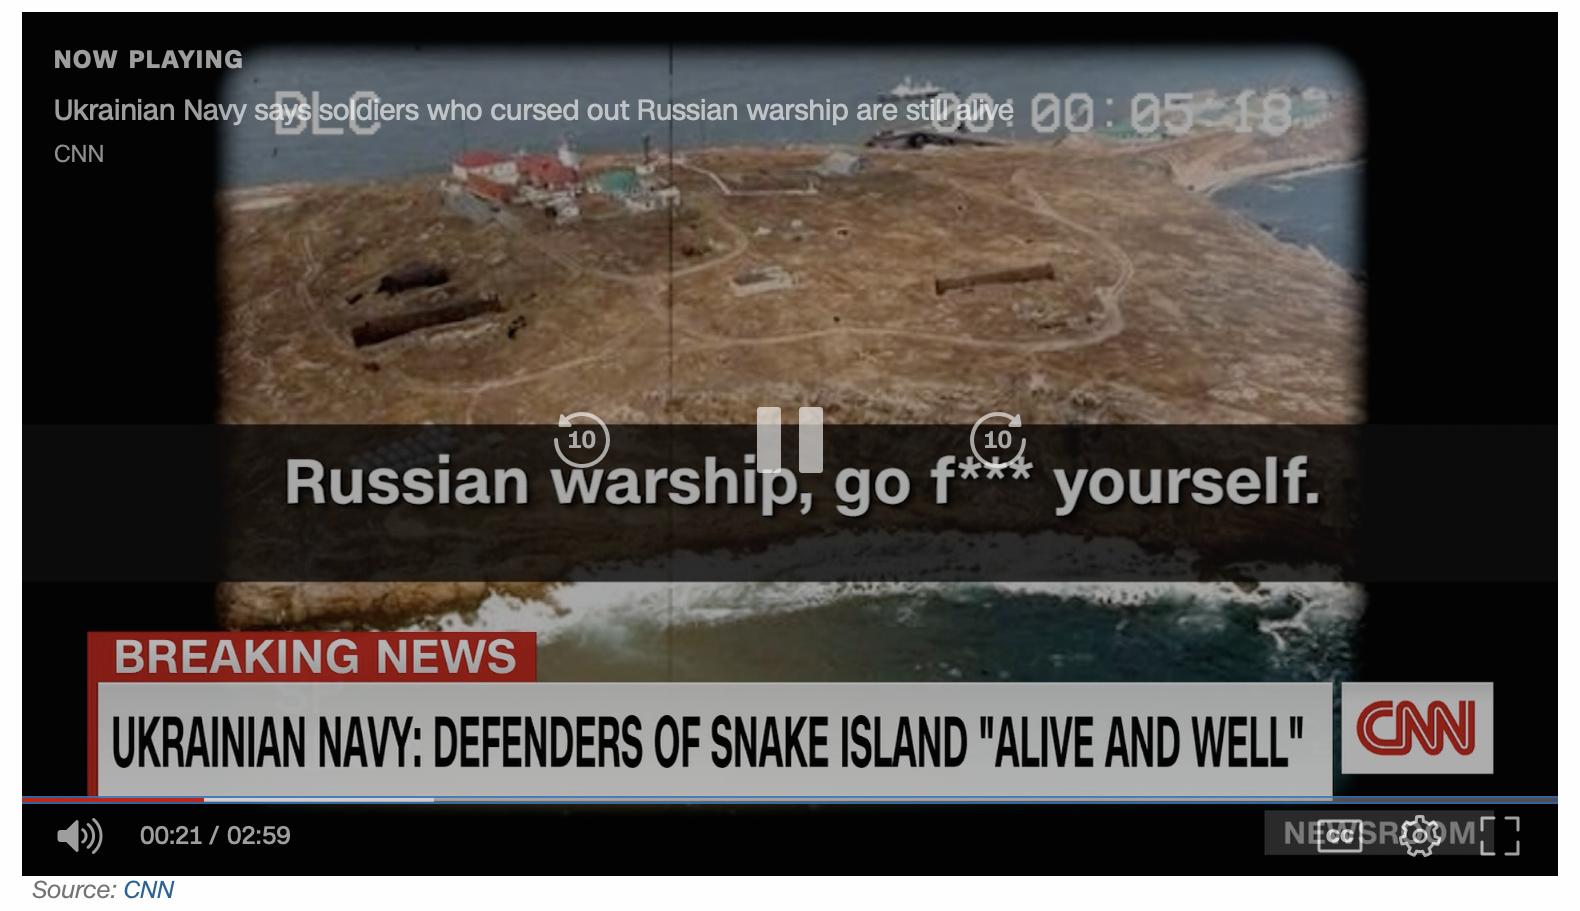 CNN報導，之前傳出全部陣亡的蛇島烏國士兵都「活得很好」。